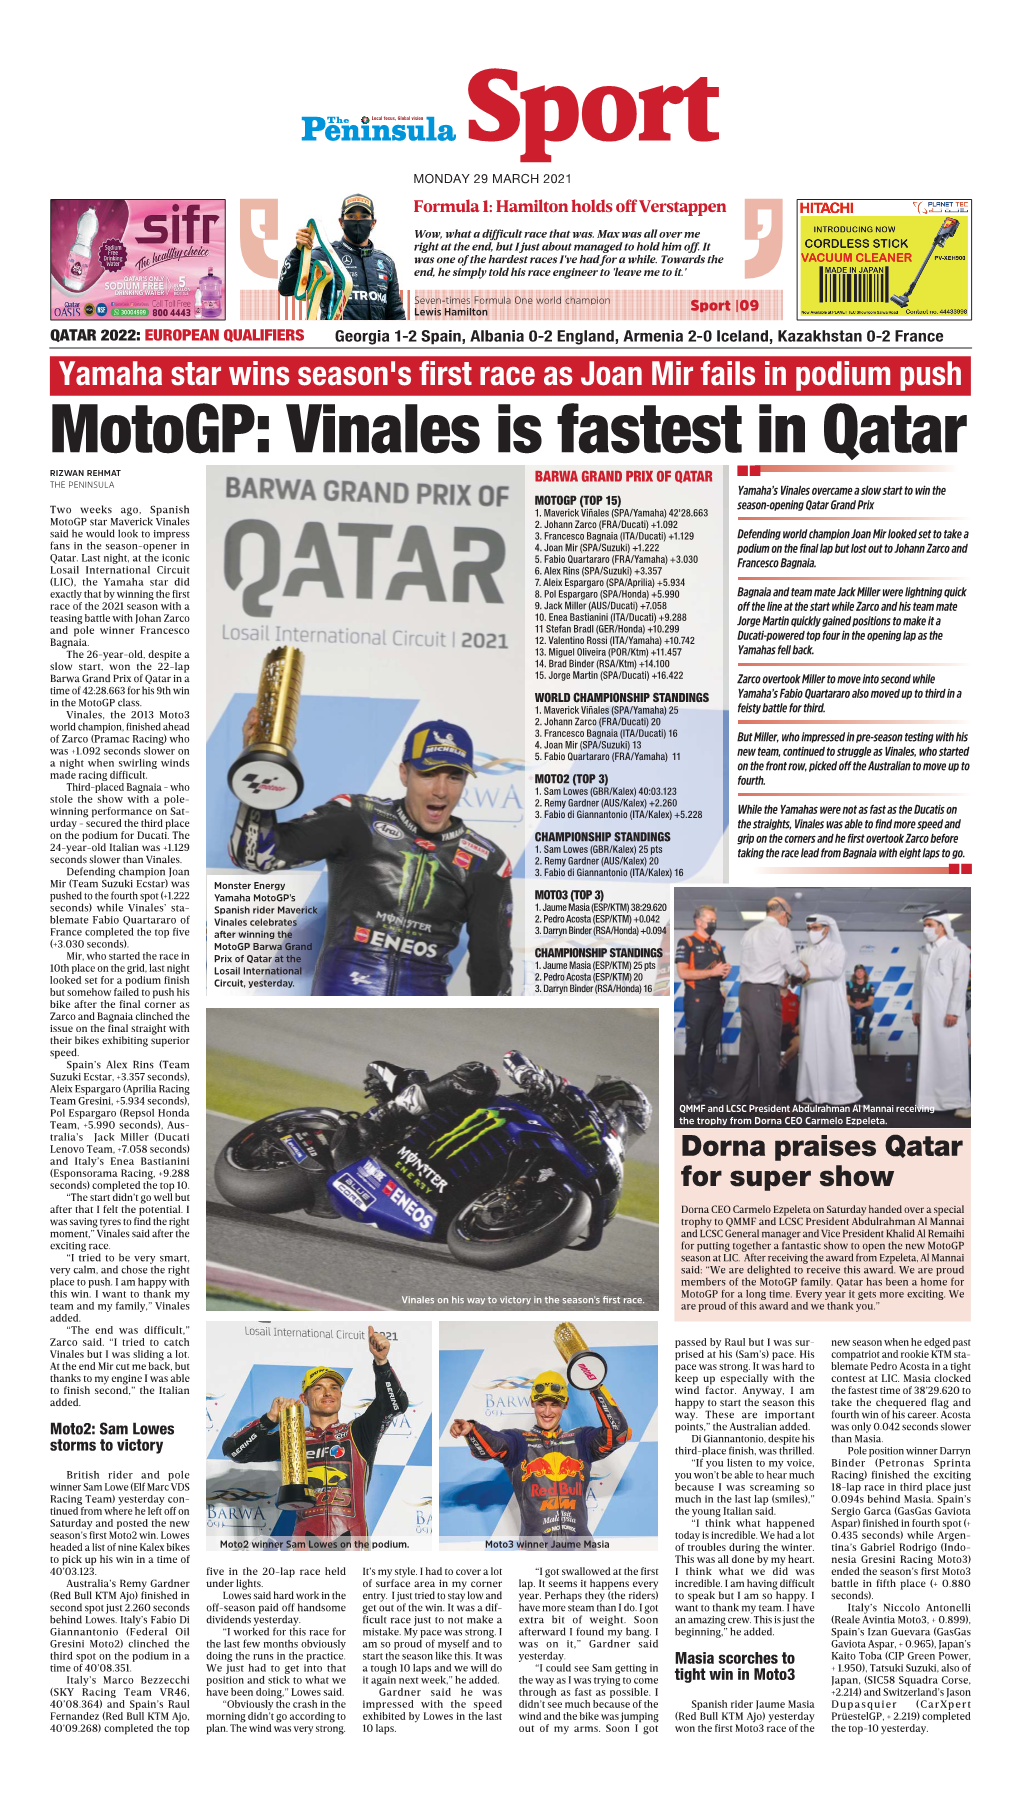 Motogp: Vinales Is Fastest in Qatar